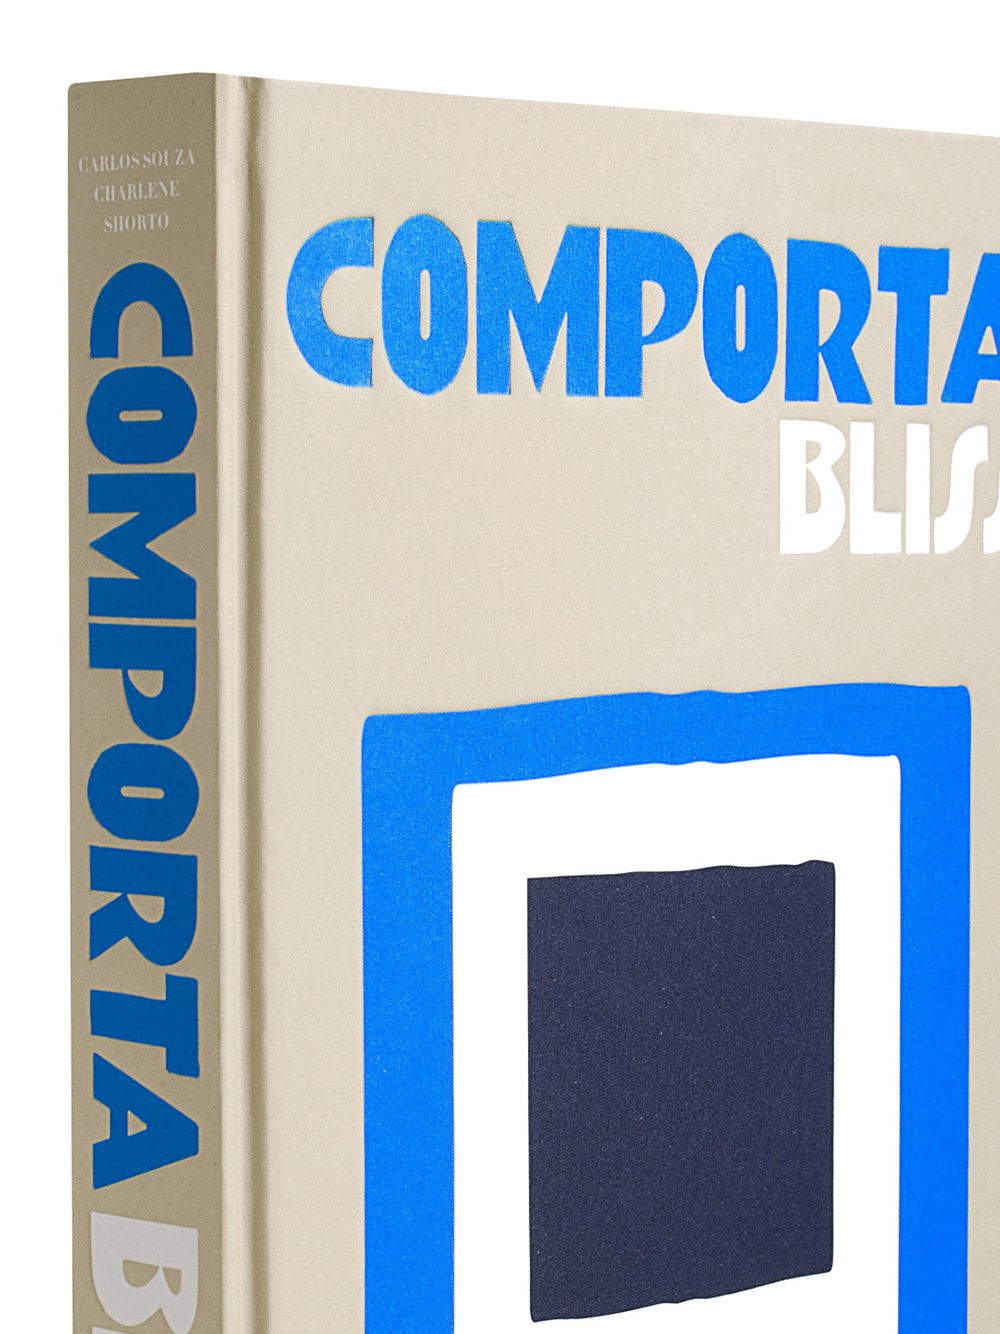 COMPORTA BLISS BOOK - $105